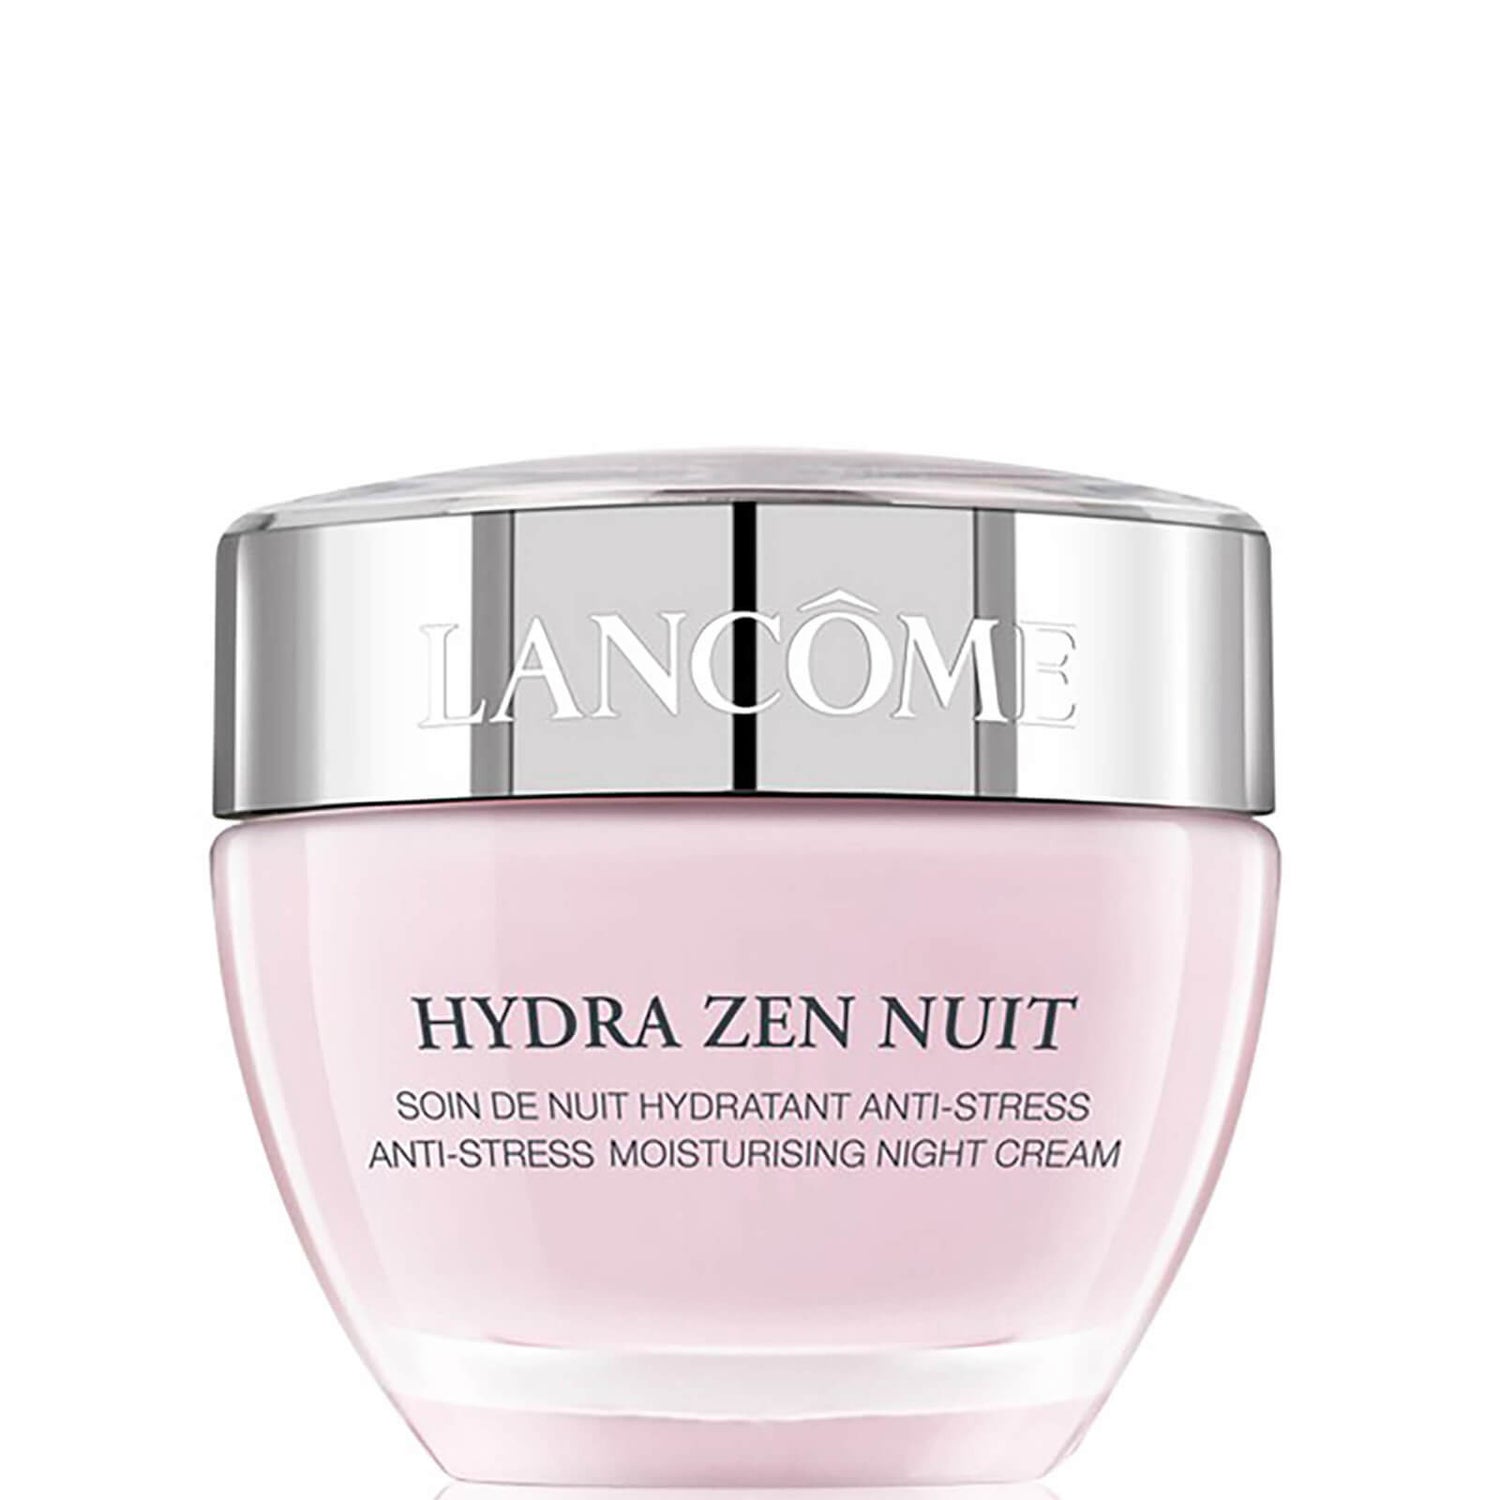 Hydra Zen Neurocalm notte crema di Lancôme  50ml